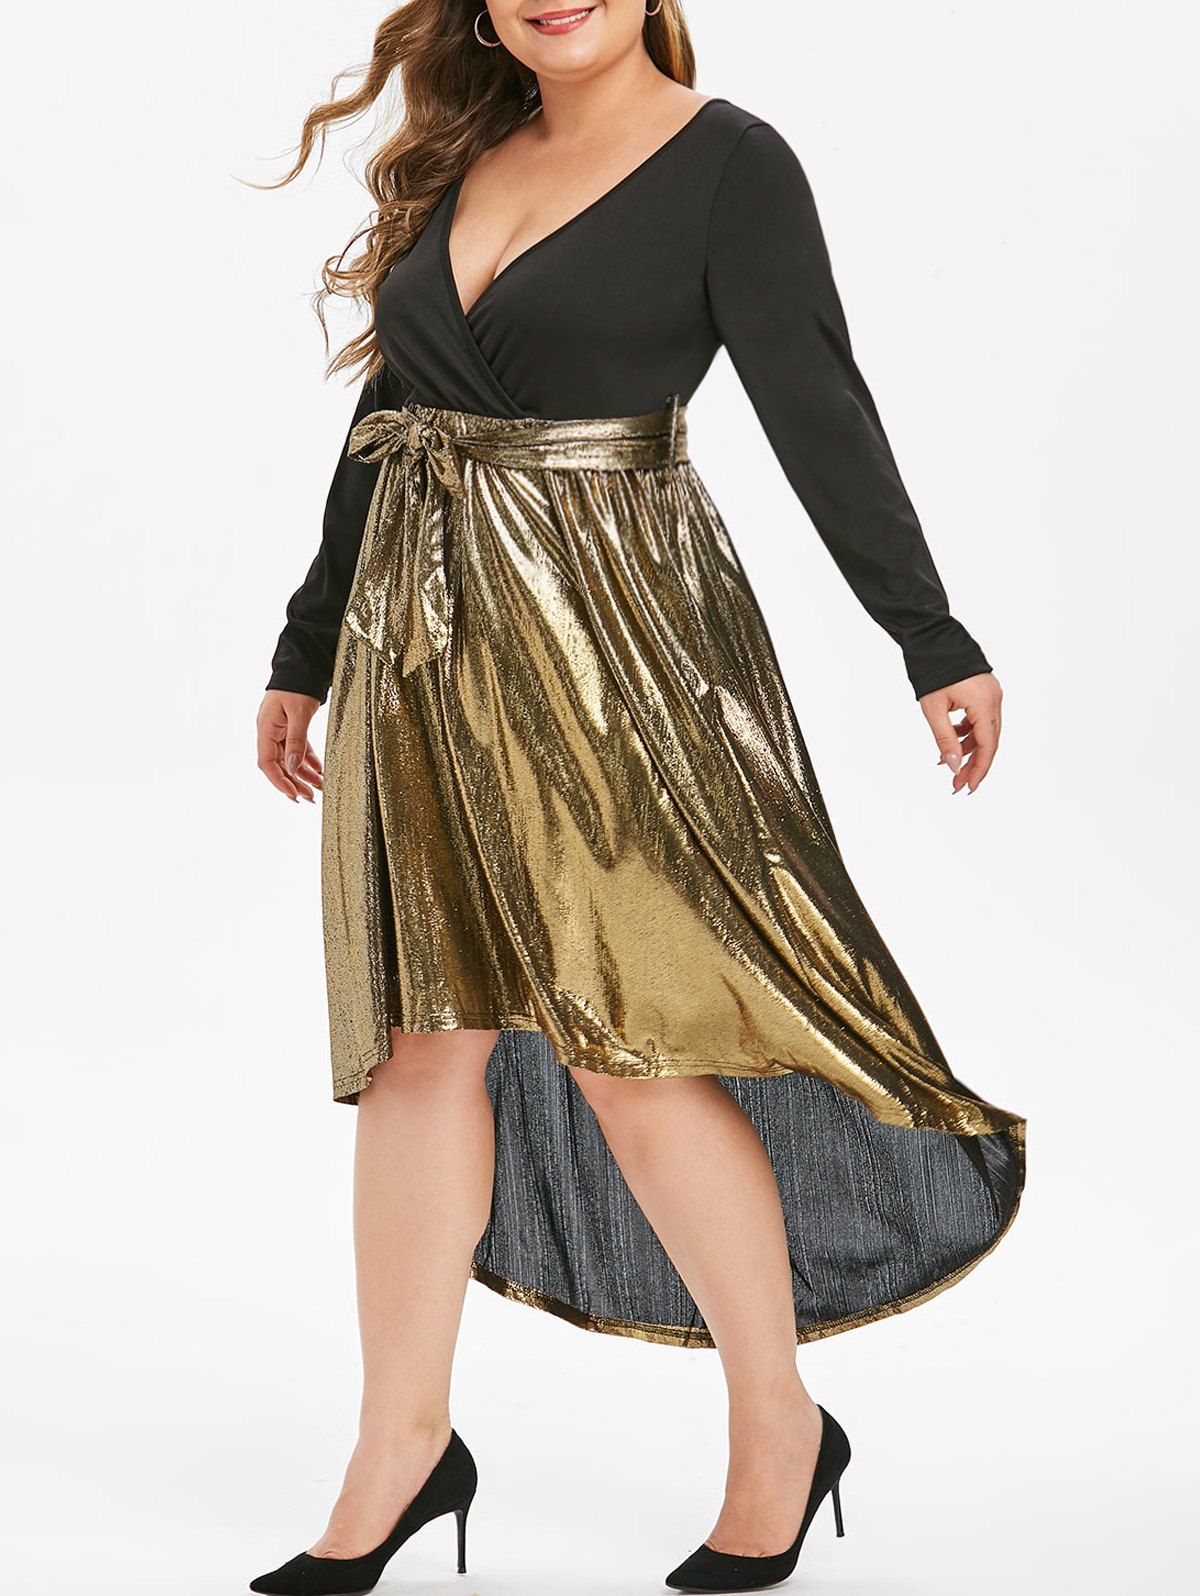 Long Sleeve Gilded Shiny High Low Surplice Plus Size Dress - BLACK L